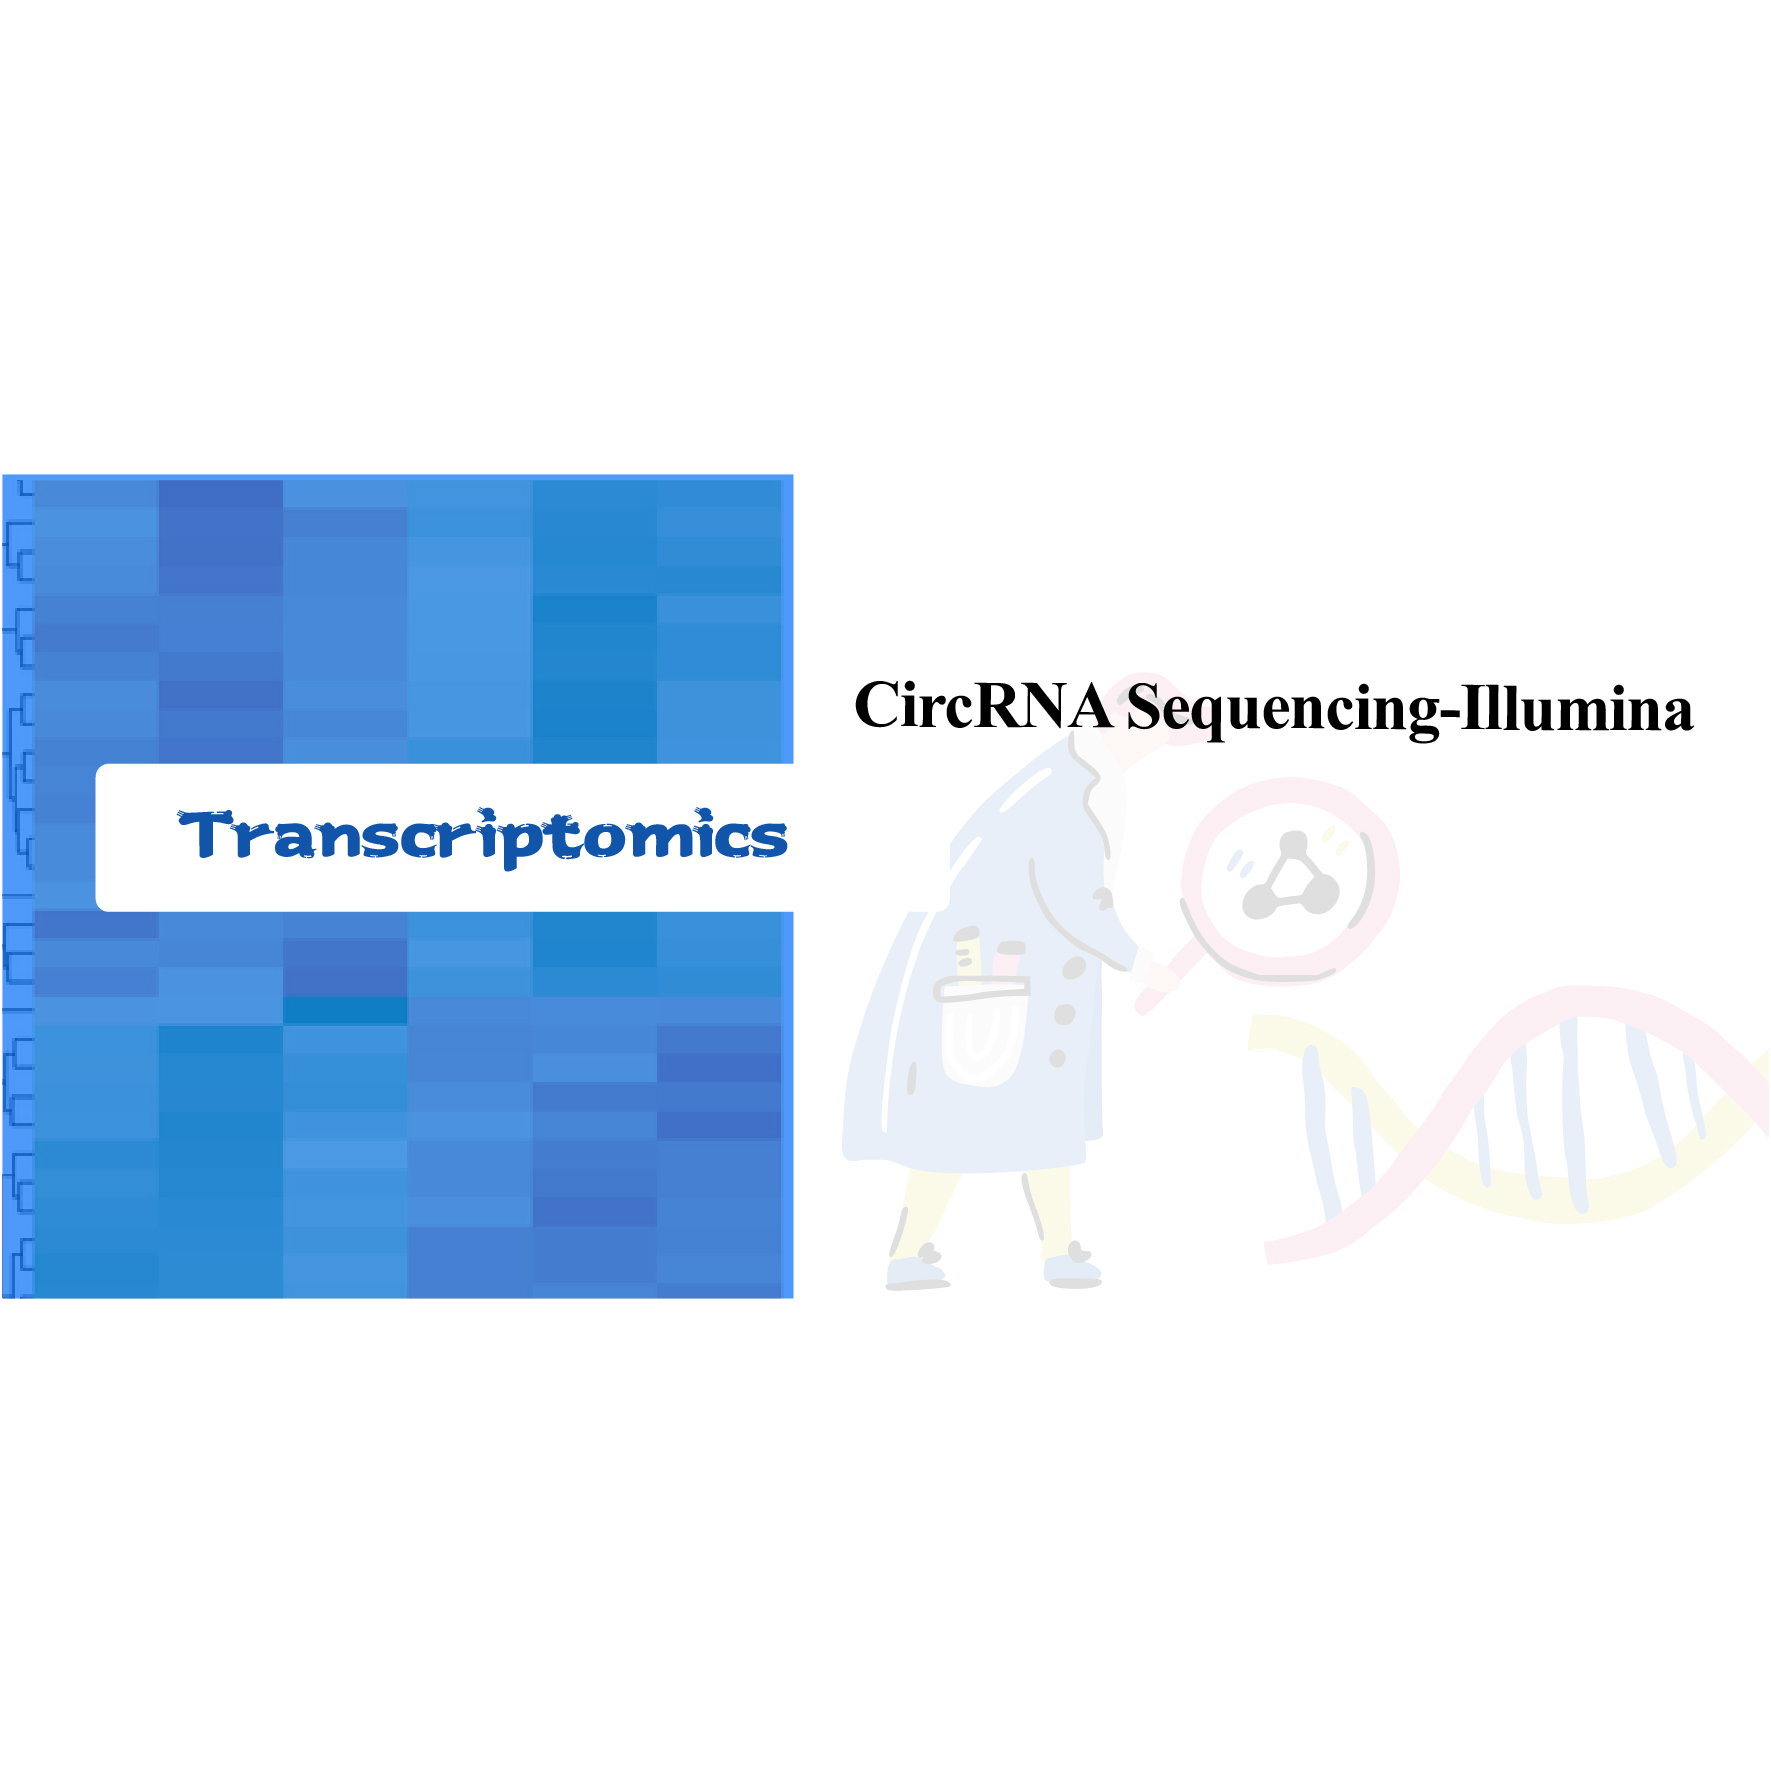 circRNA sequencing-Illumina Featured Image